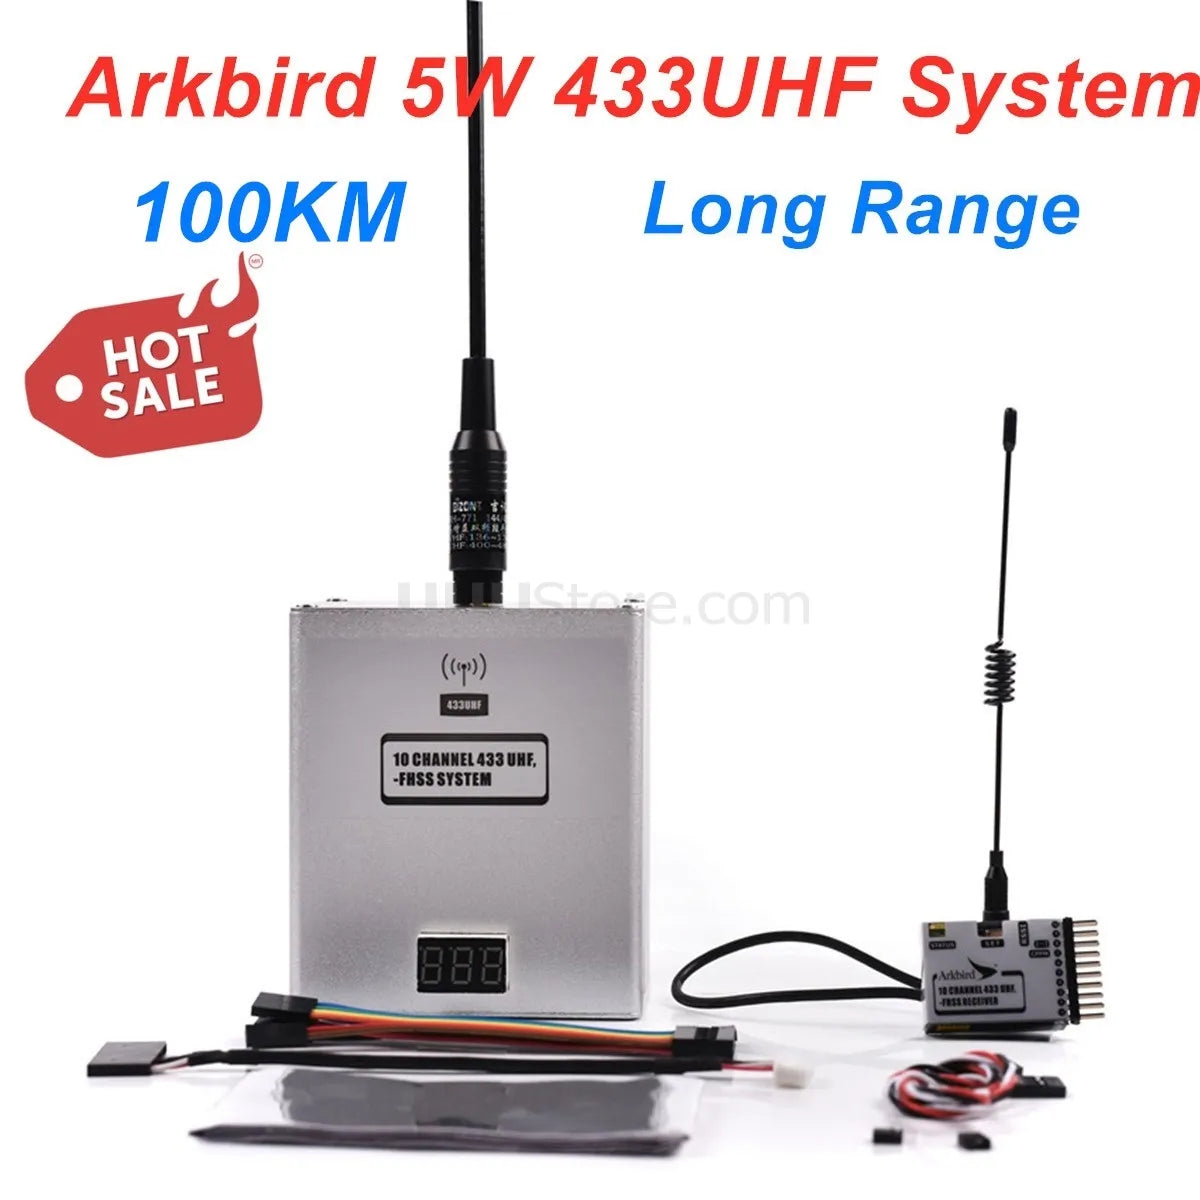 Arkbird 5W 433UHF System 1OOKM Long Range 7e,Con (6